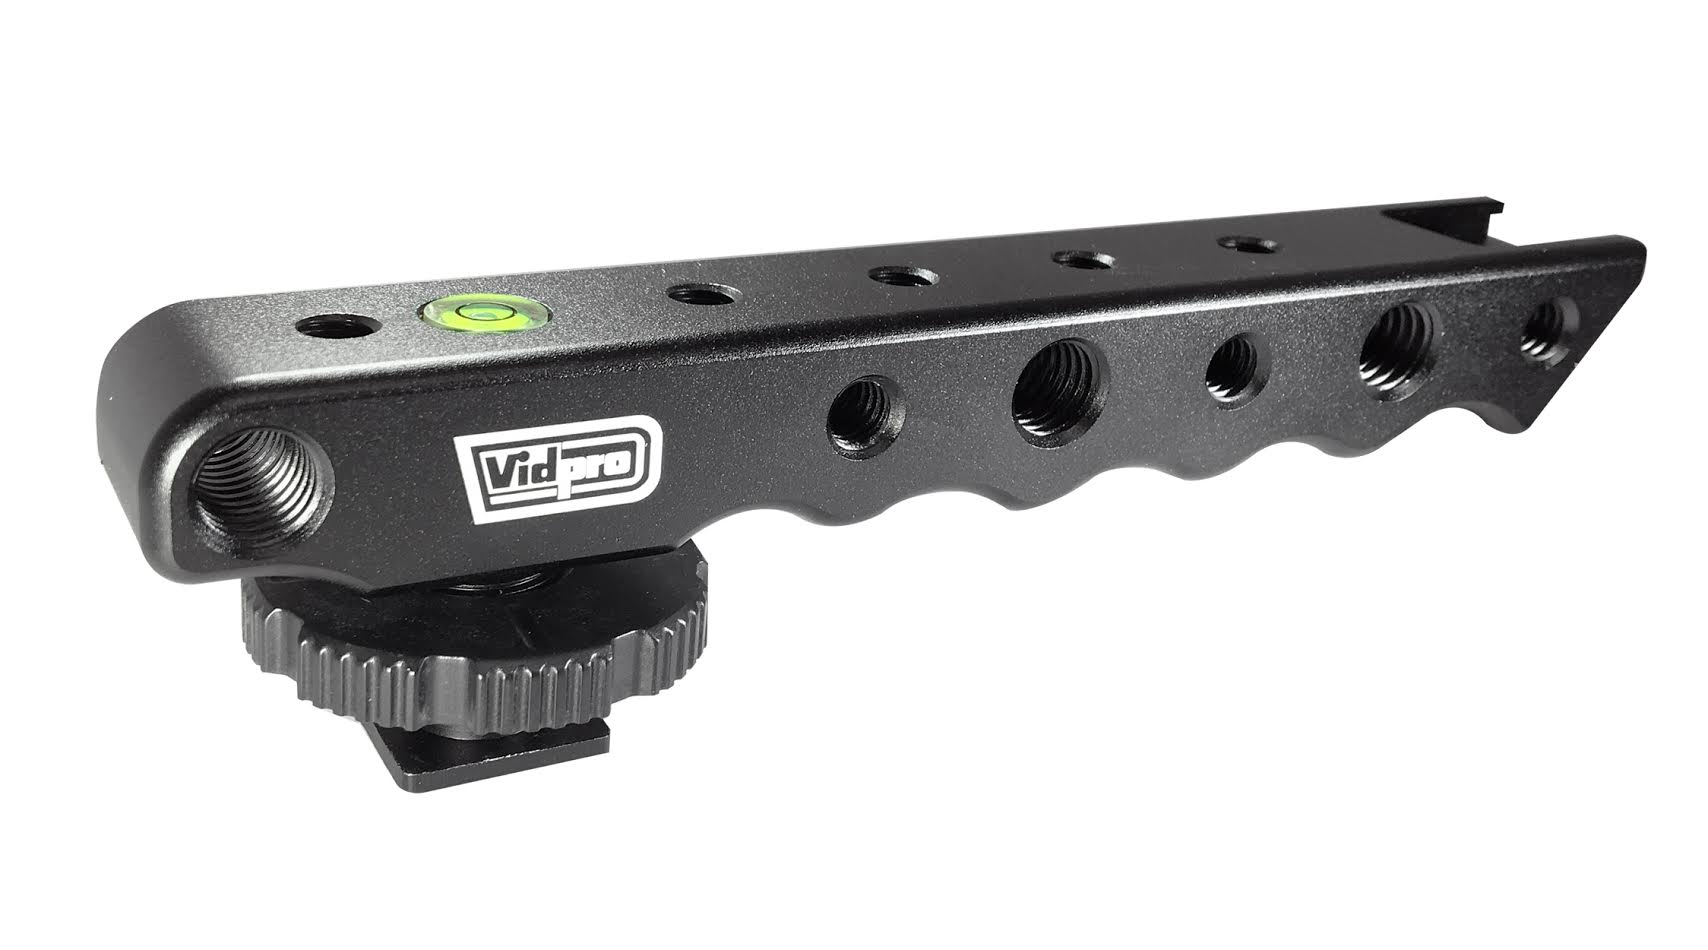 Video Stabilizers for SonyDigital Camera